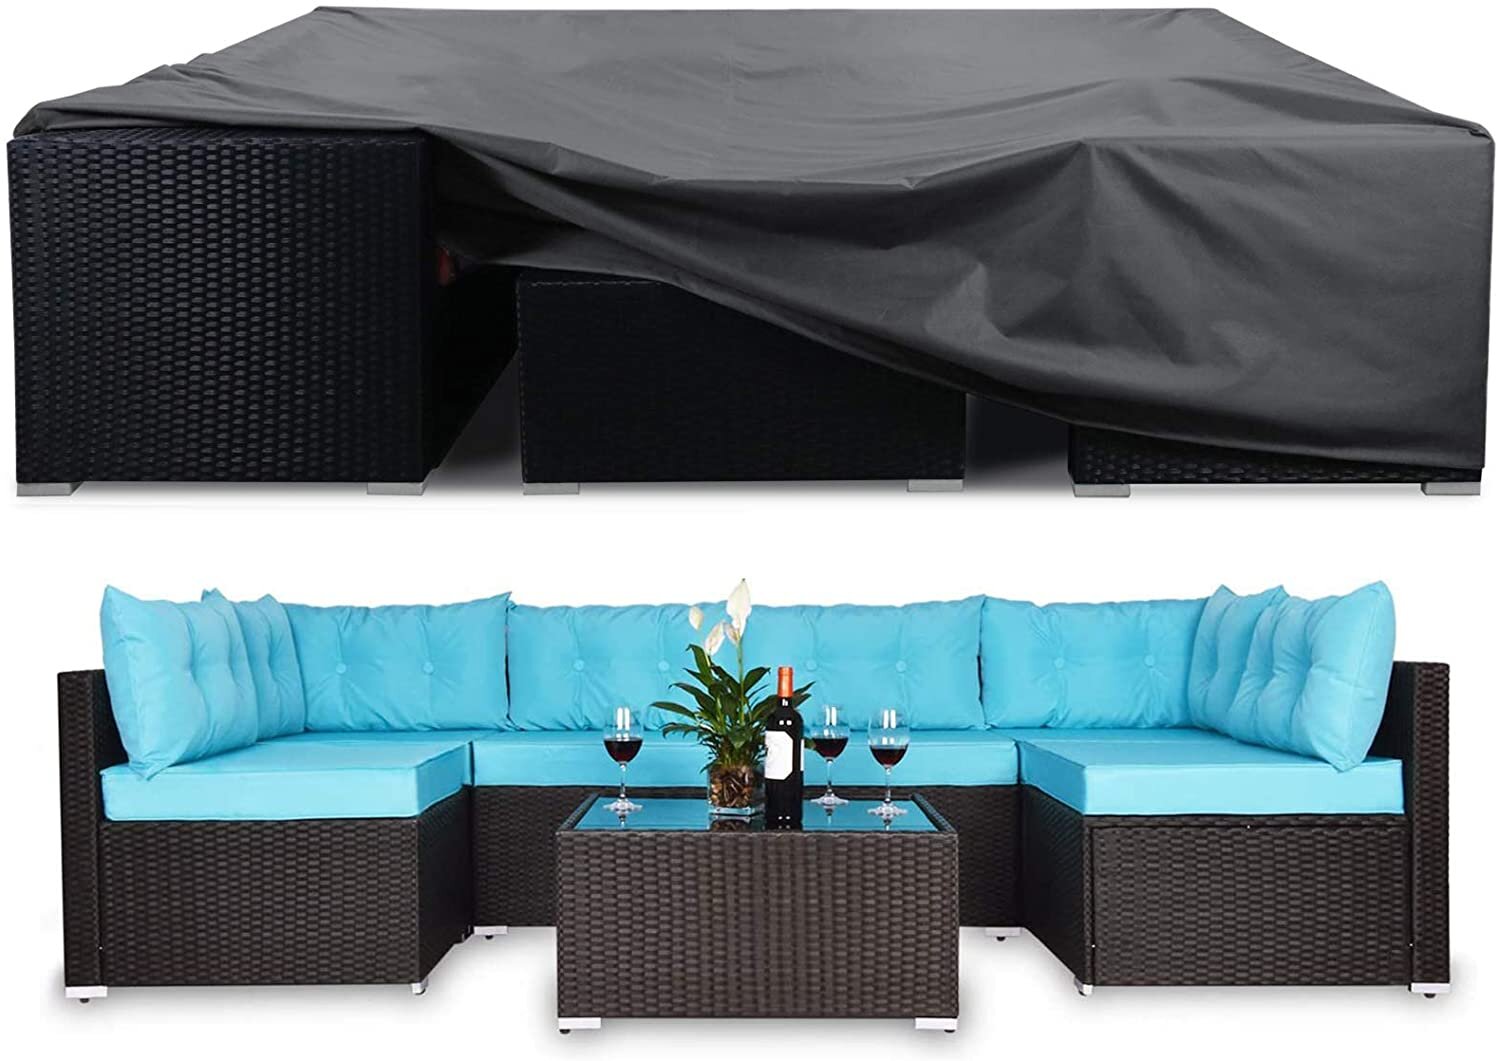 Oxbridge Green Companion Seat Waterproof Outdoor Garden Furniture Cover 